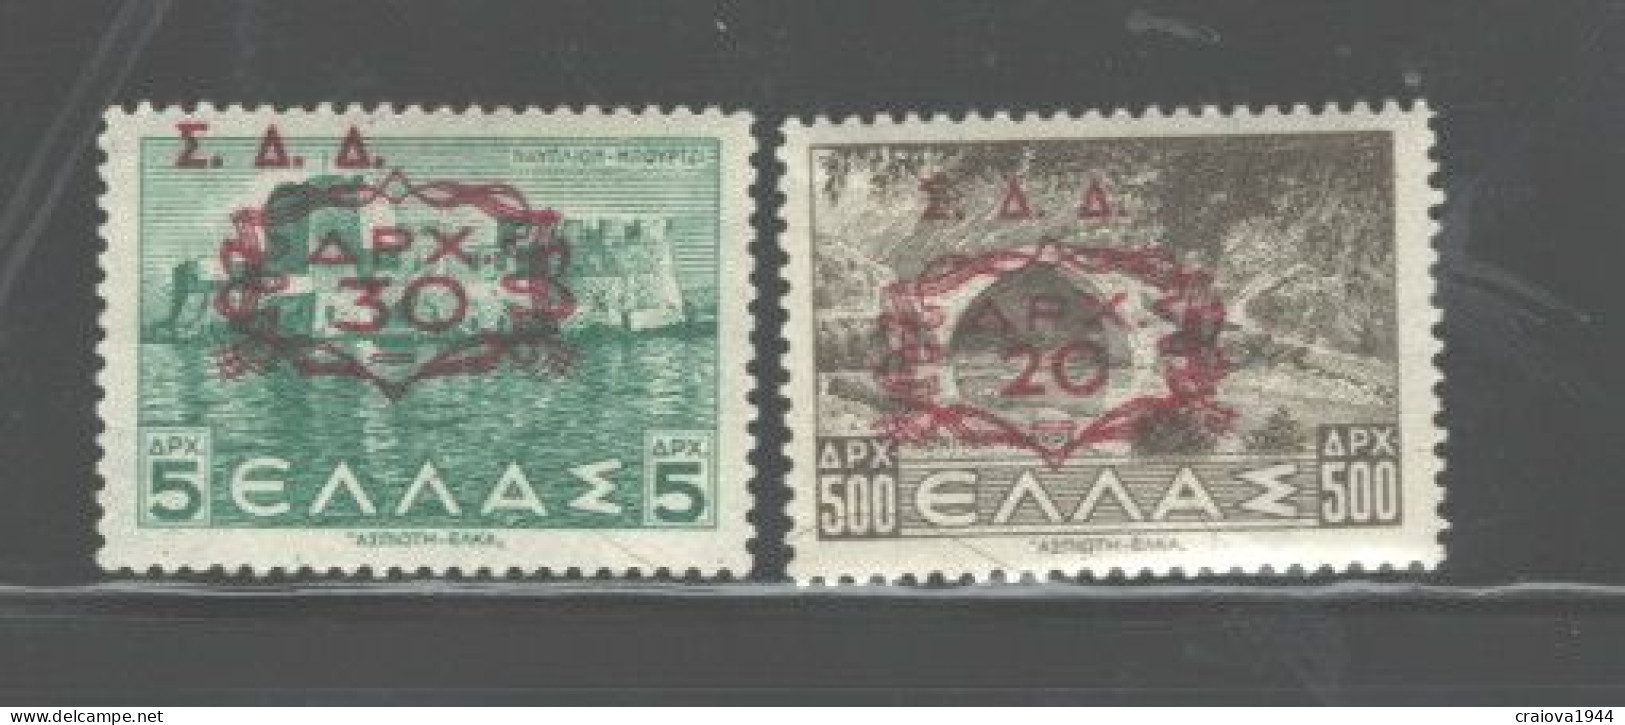 GREECE STAMPS,1947 #N243-N244 OVERPRINT, USED IN DODECANESE ISL. - Dodekanisos